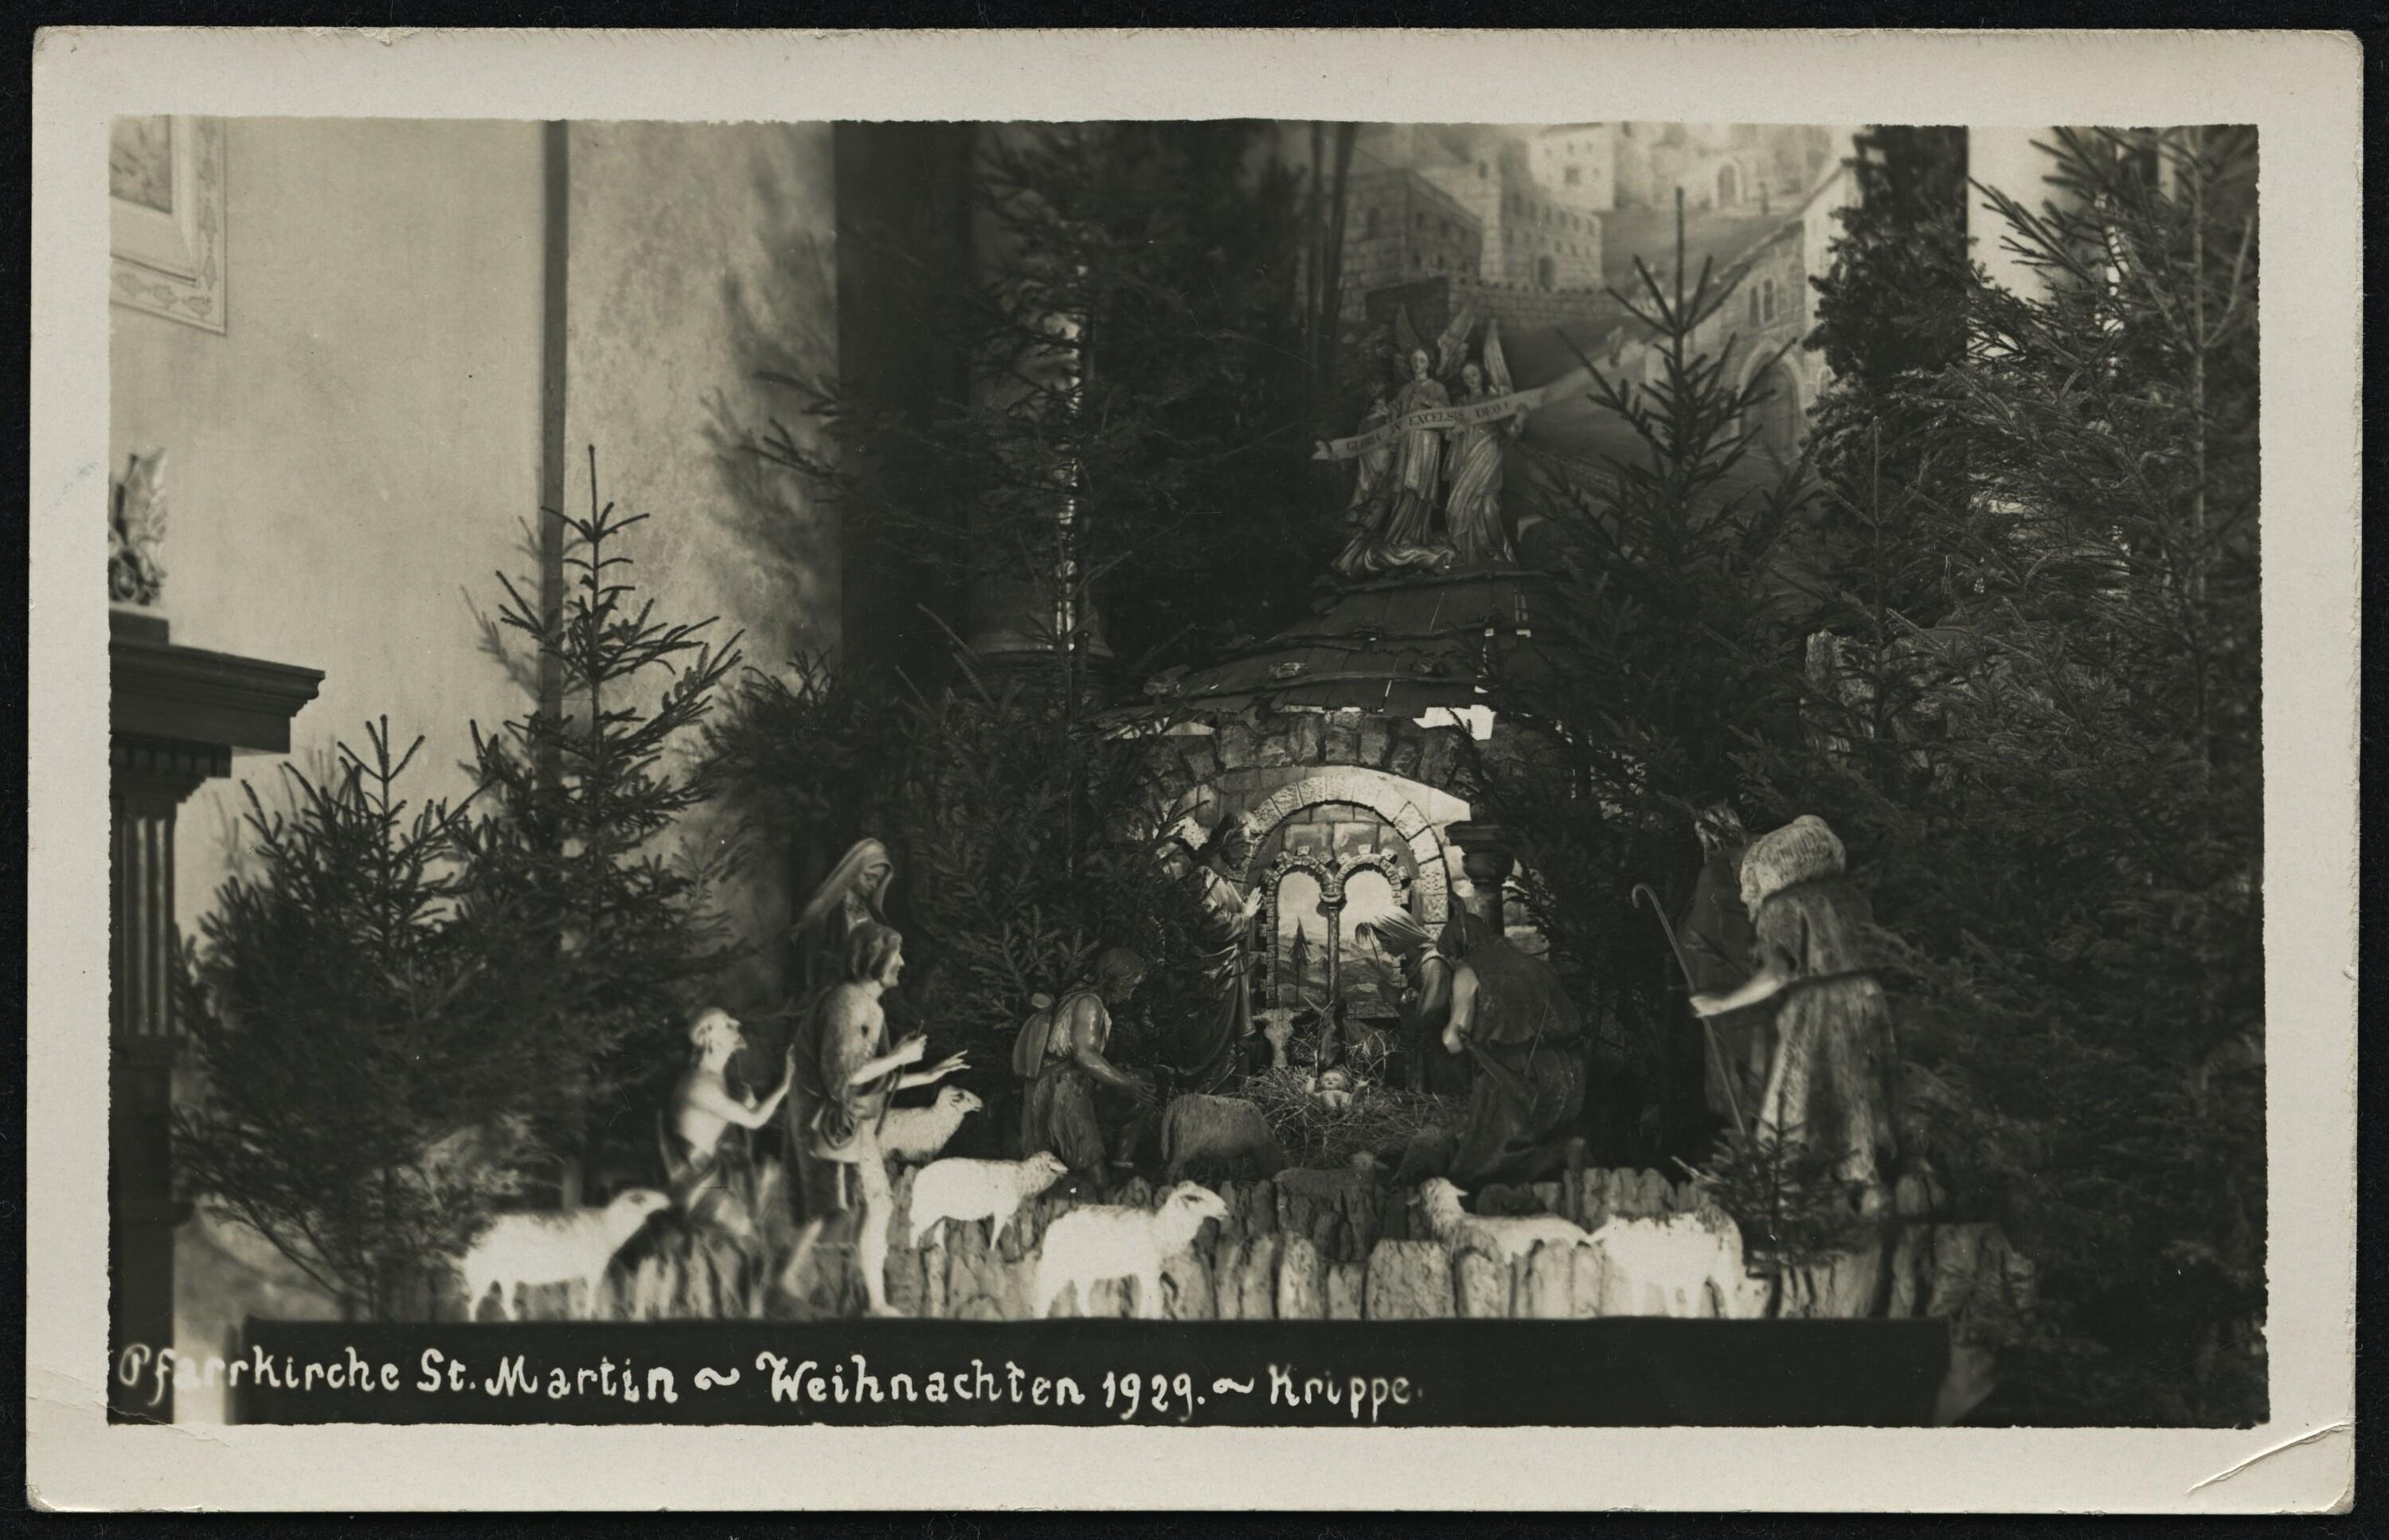 [Dornbirn] Pfarrkirche St. Martin - Weihnachten 1929 - Krippe></div>


    <hr>
    <div class=